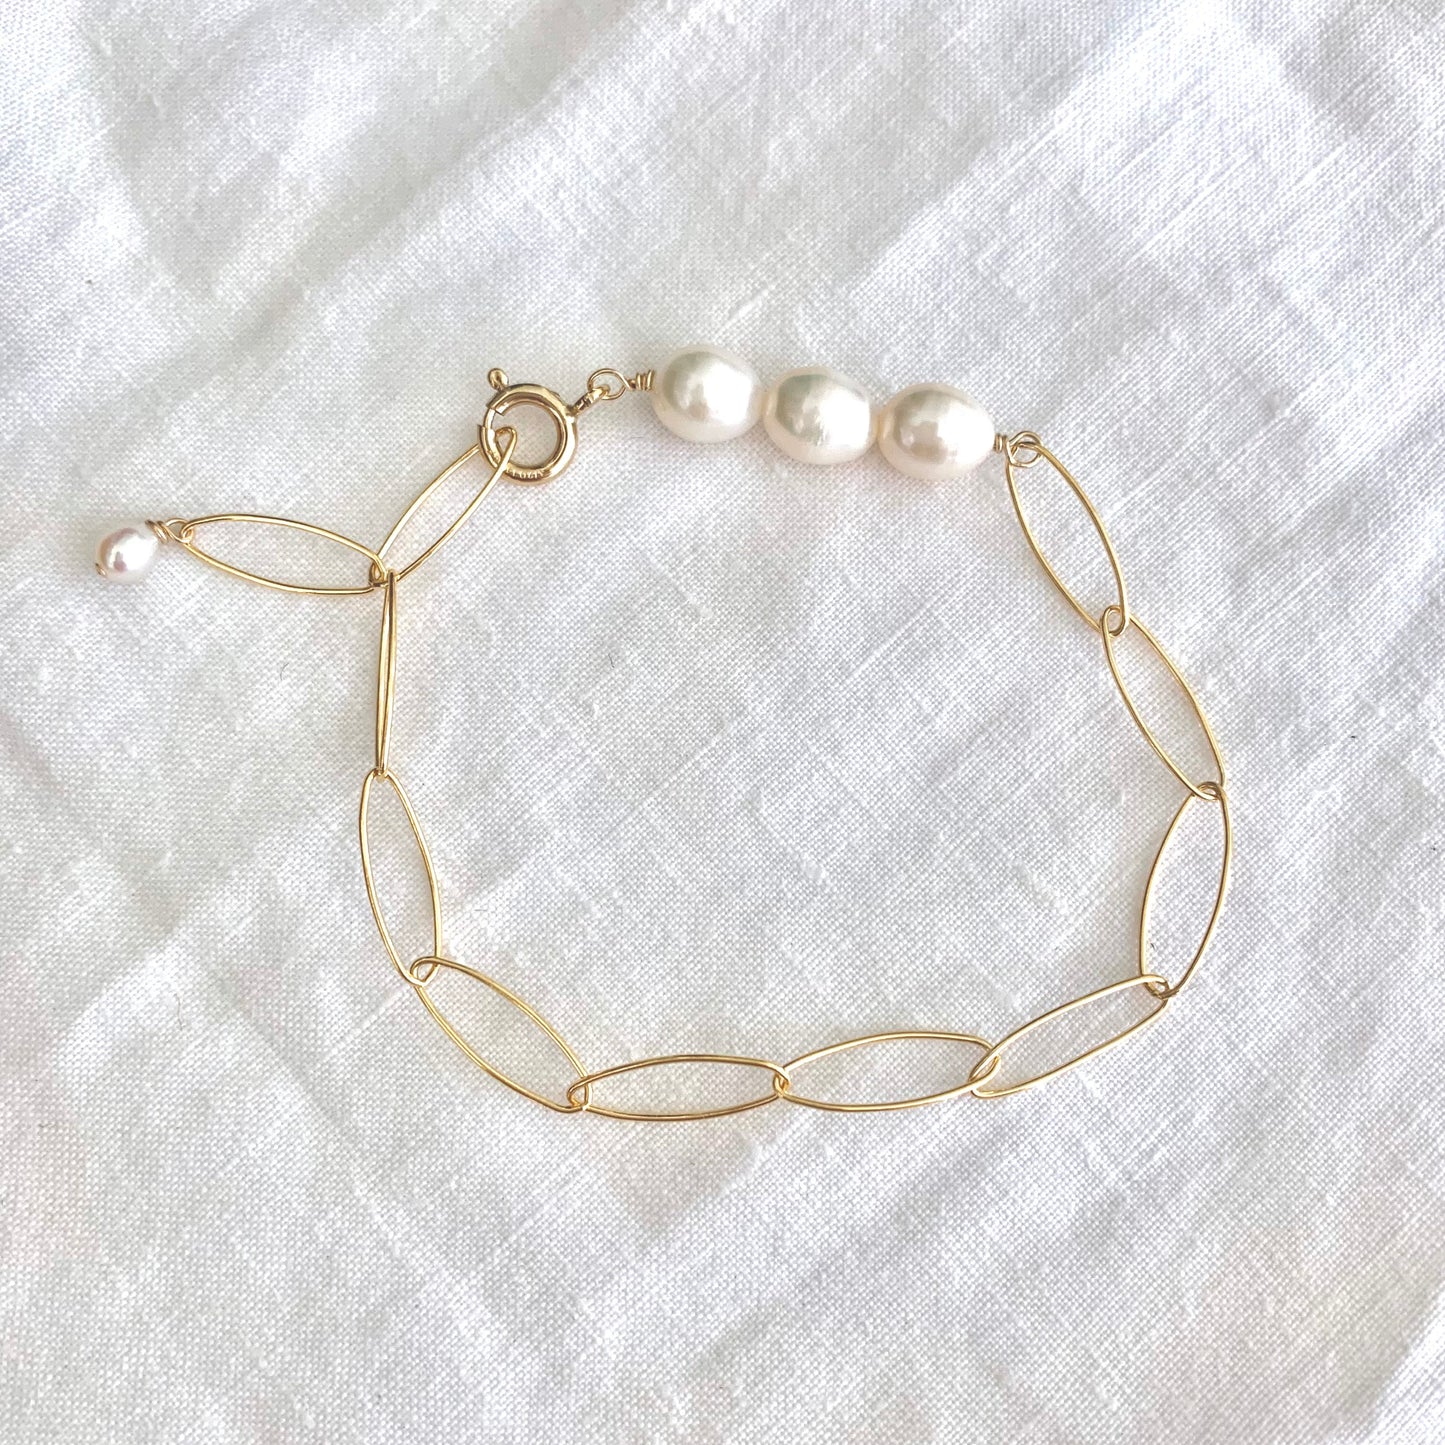 Elise pearl bracelet